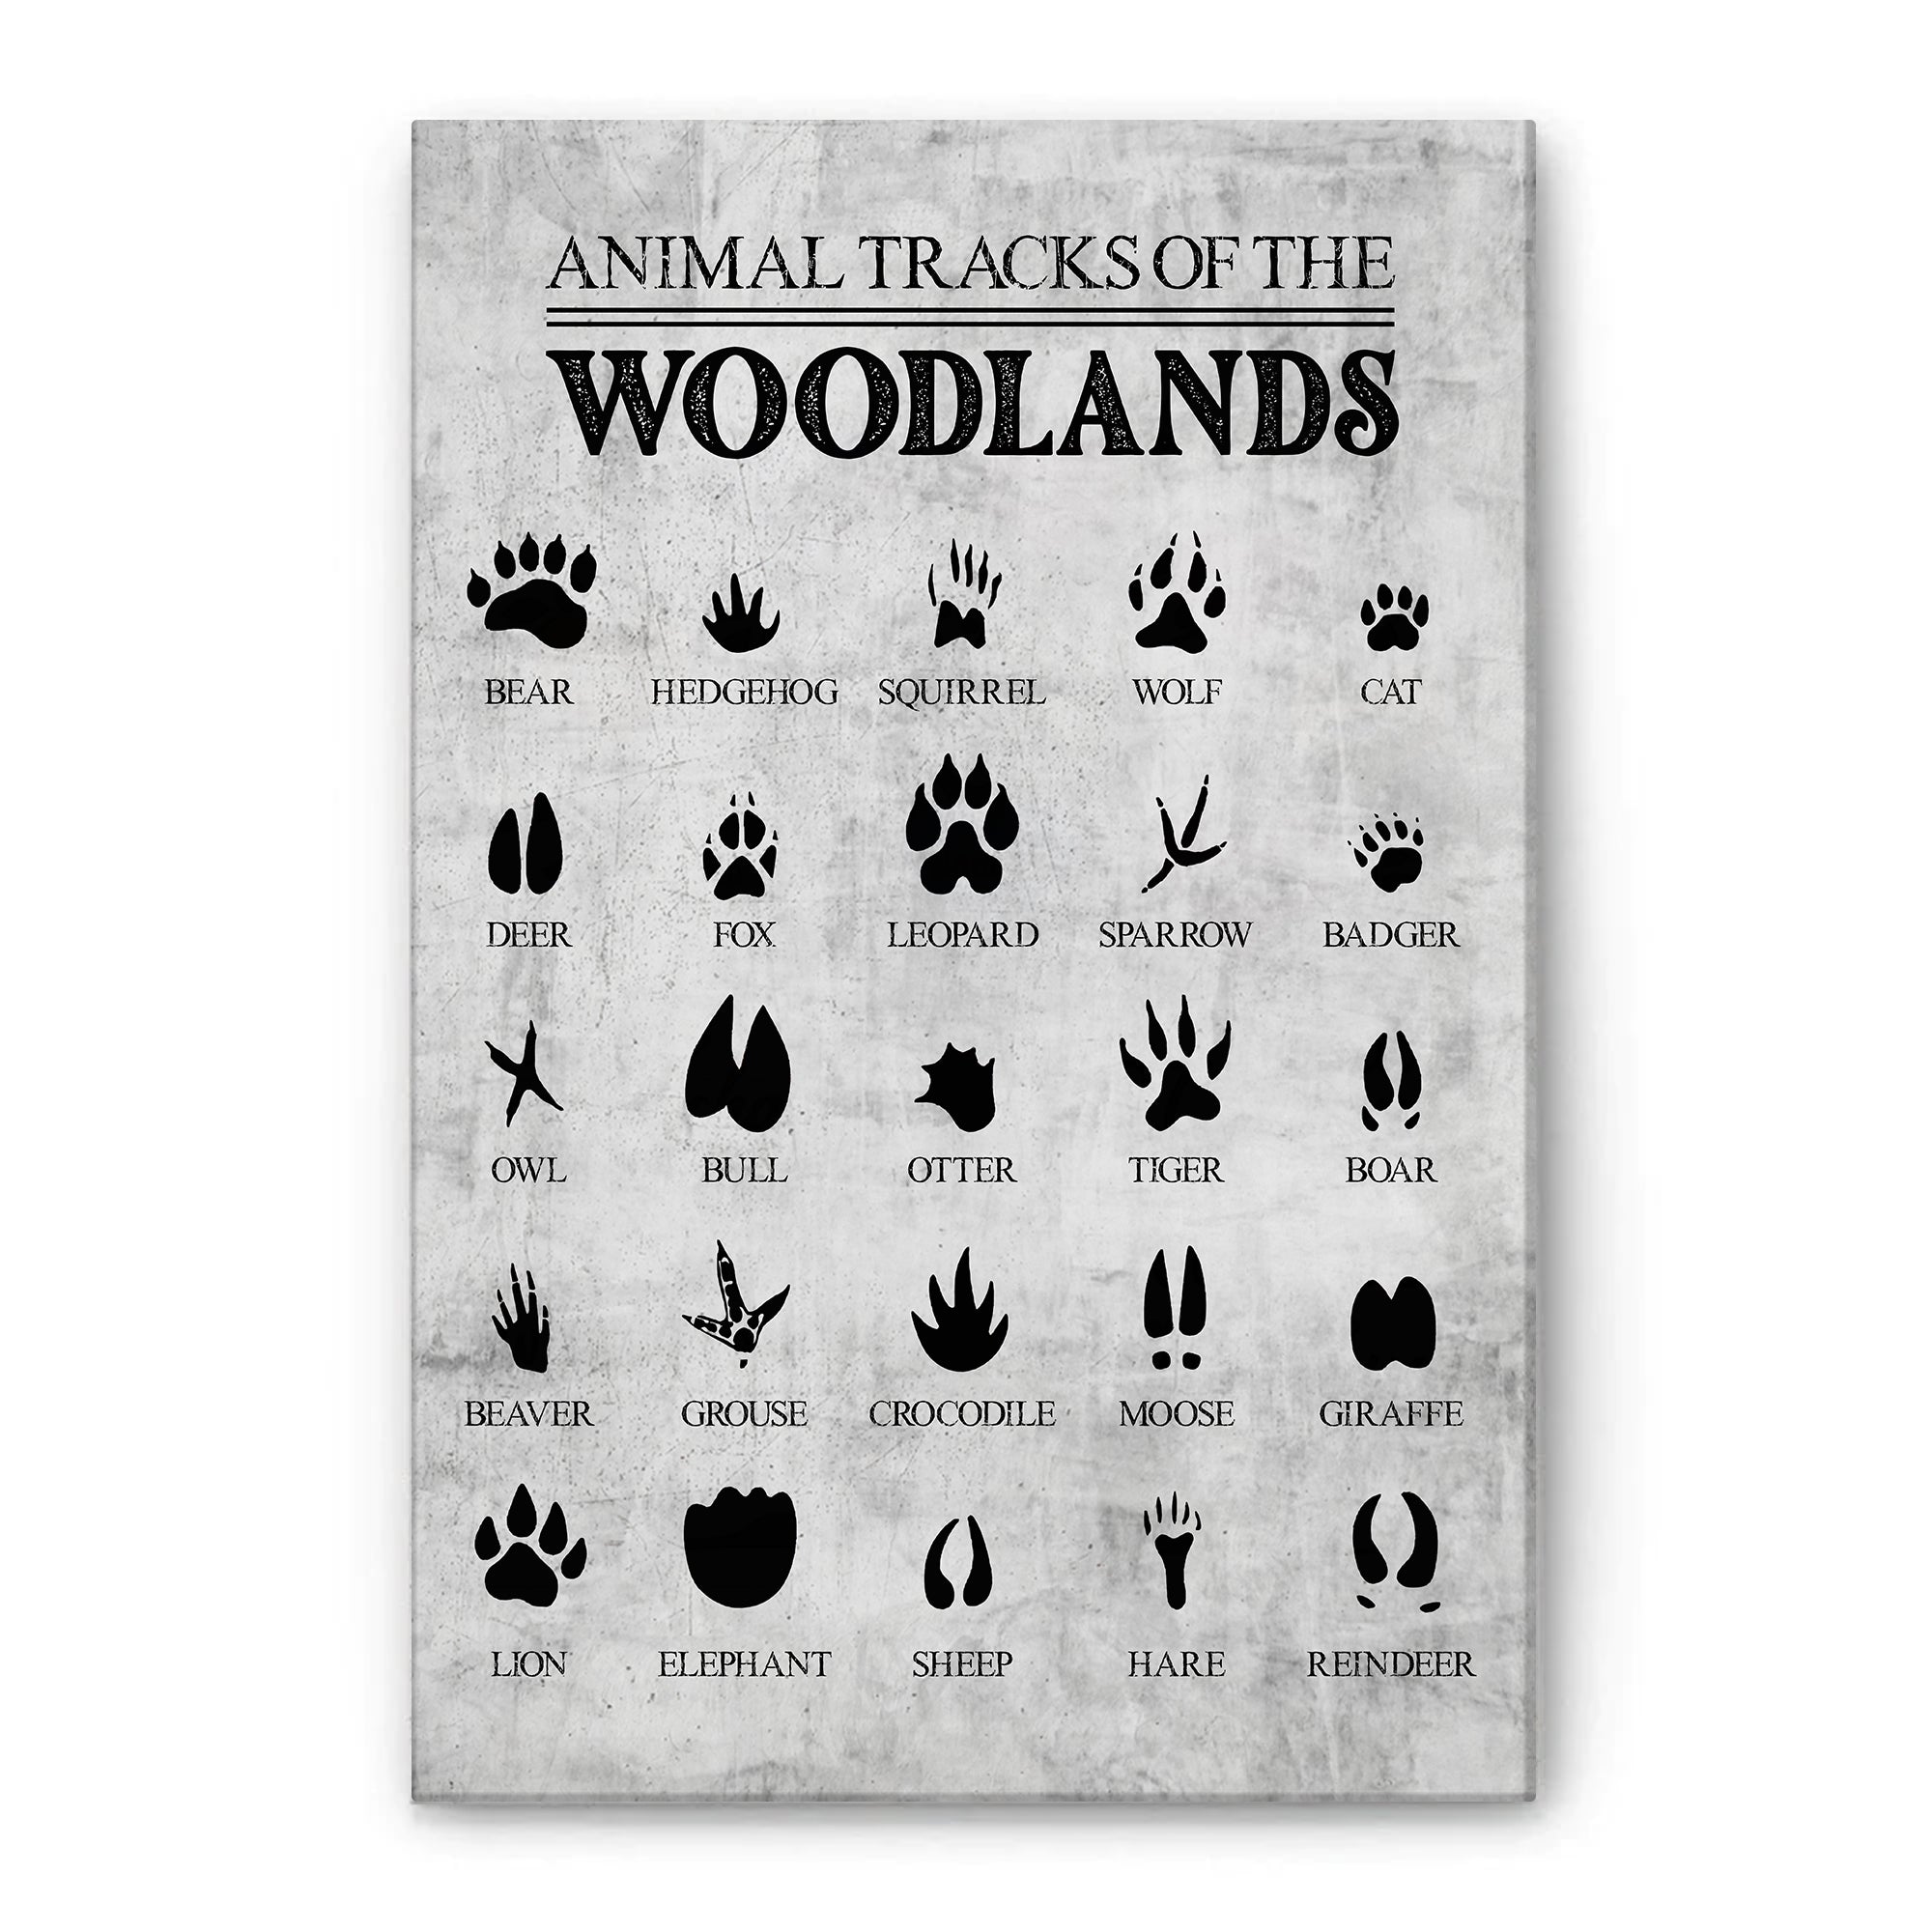 Animal Tracks, Woodland Animals footprints Clipart pack